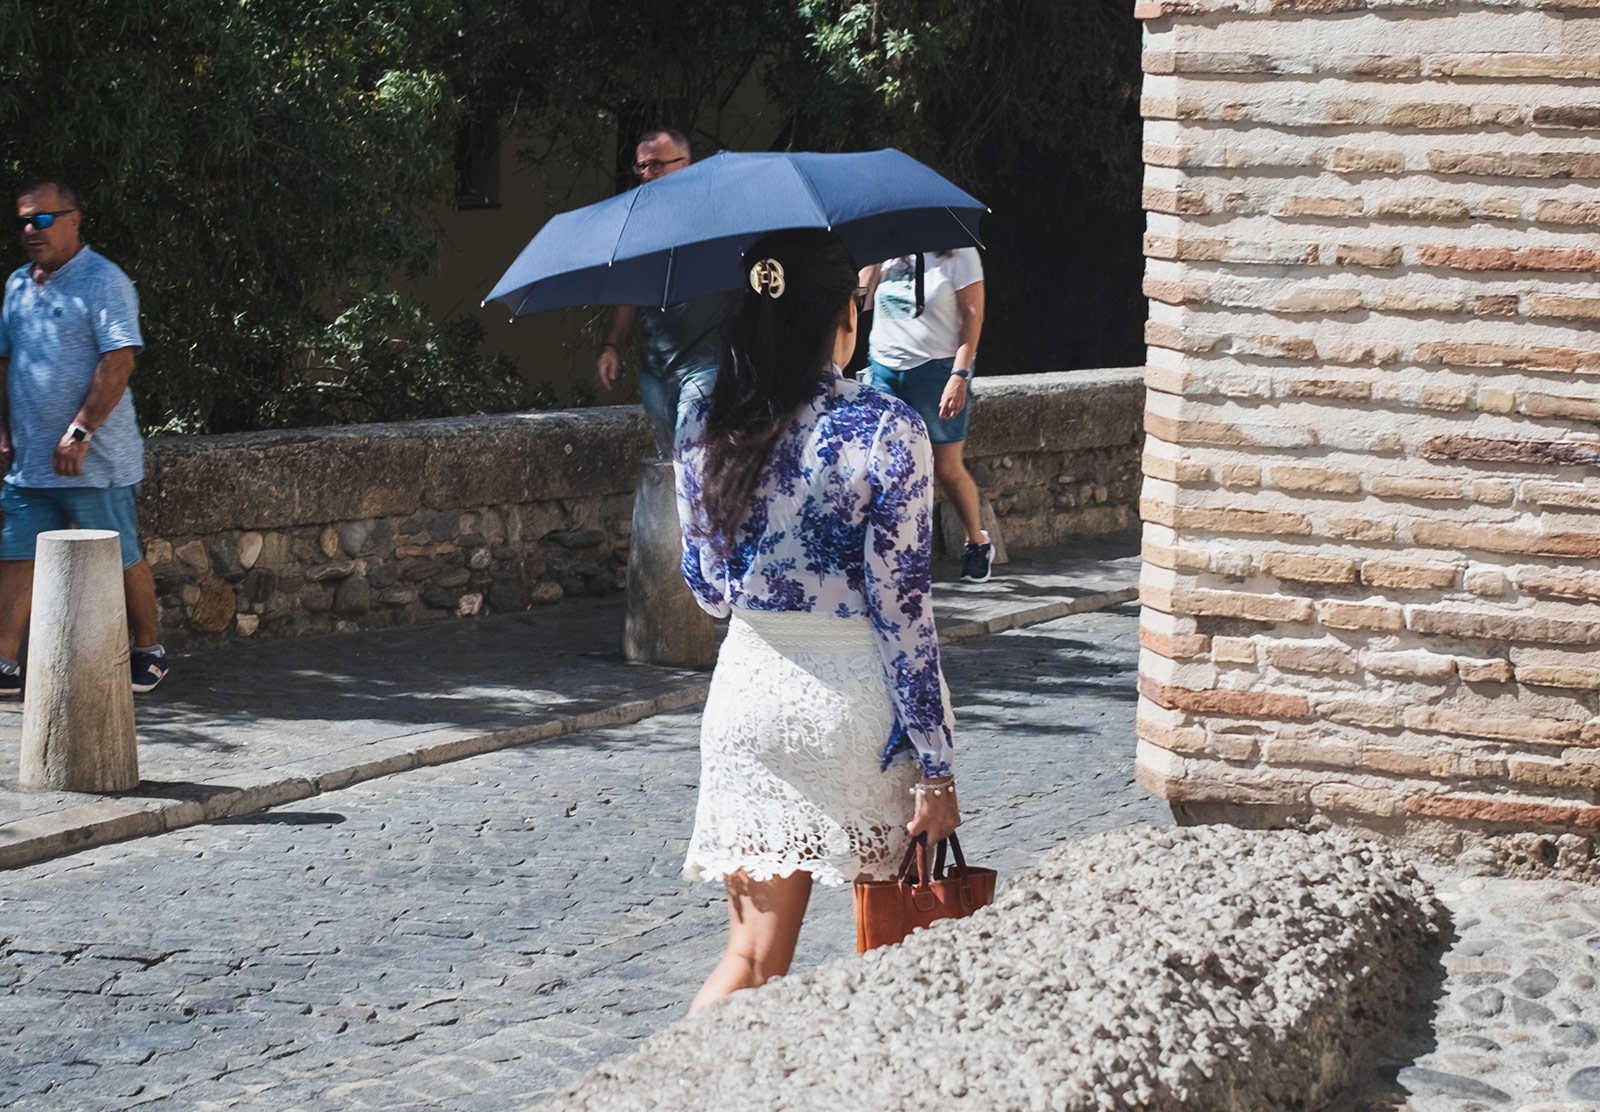 Woman using an umbrella for shade